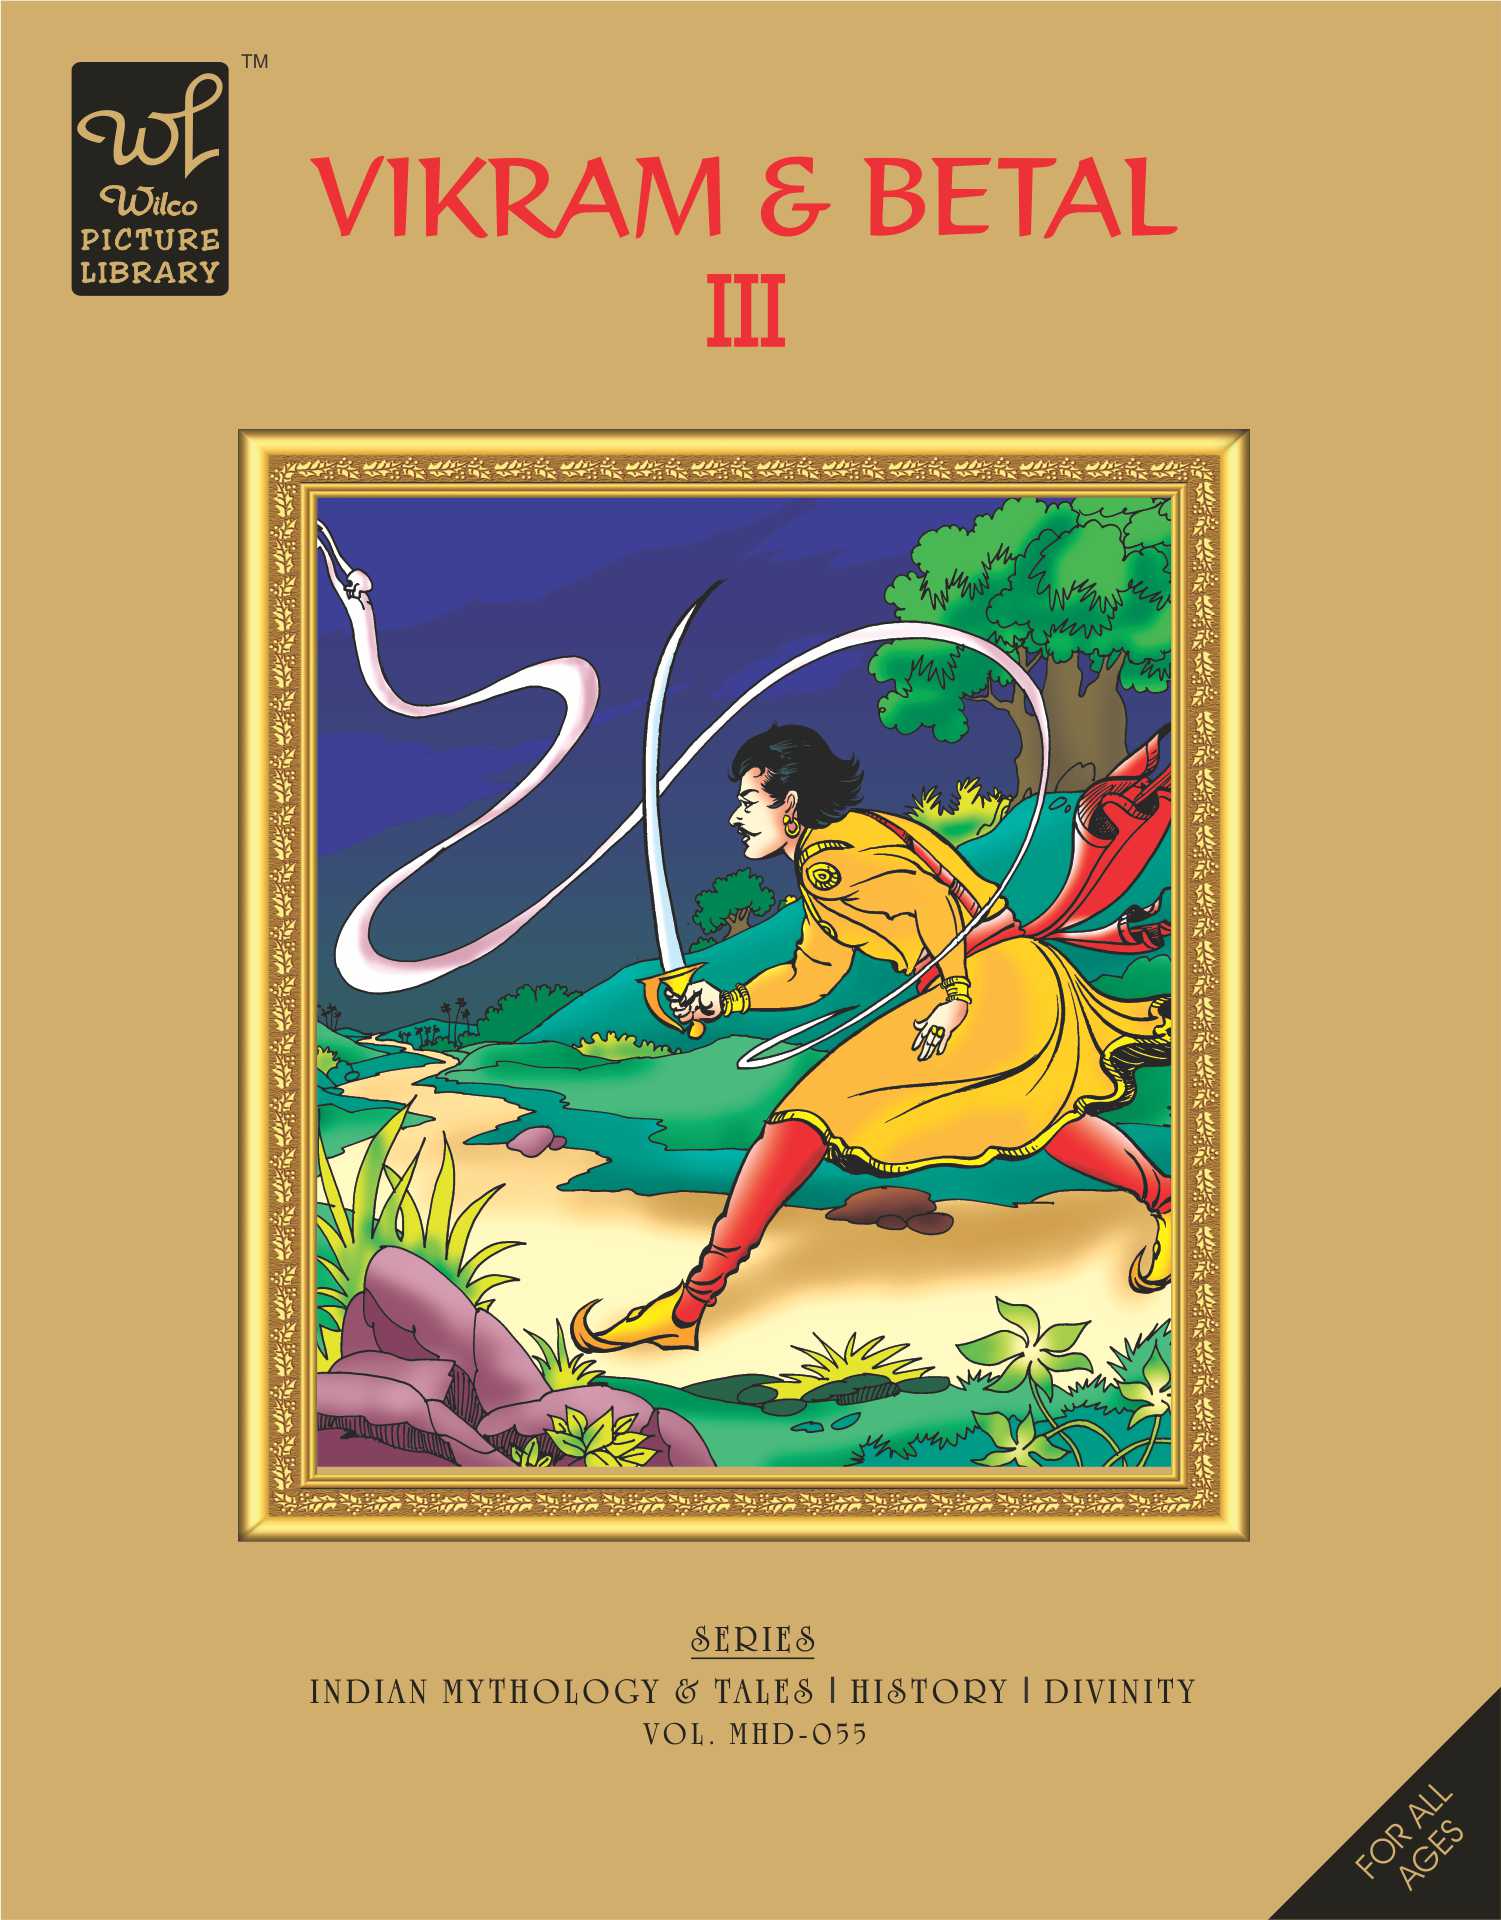 WPL:Vikram & Betal - III